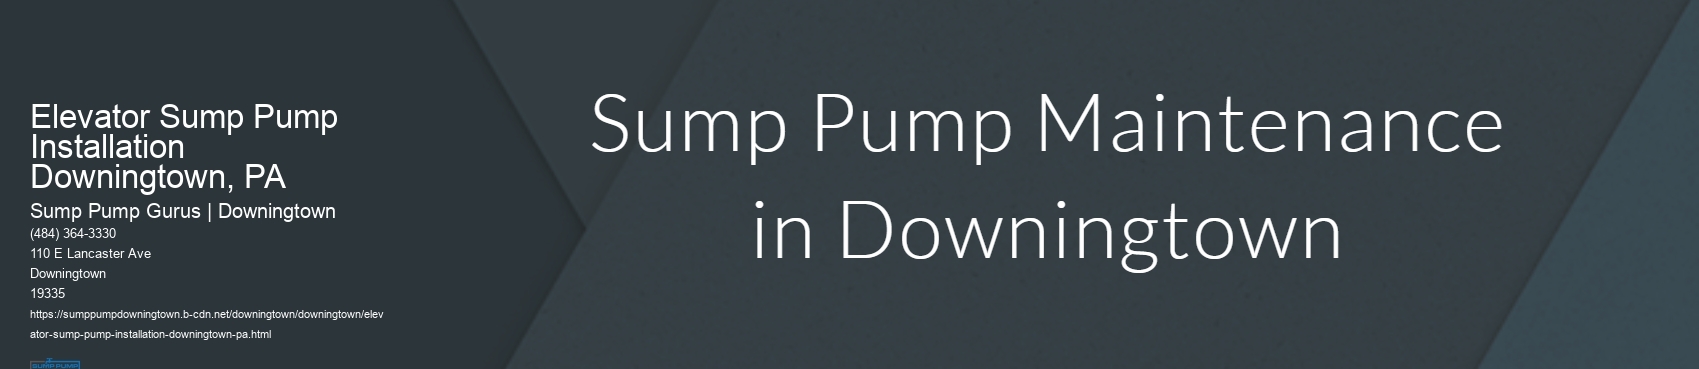 Elevator Sump Pump Installation Downingtown, PA